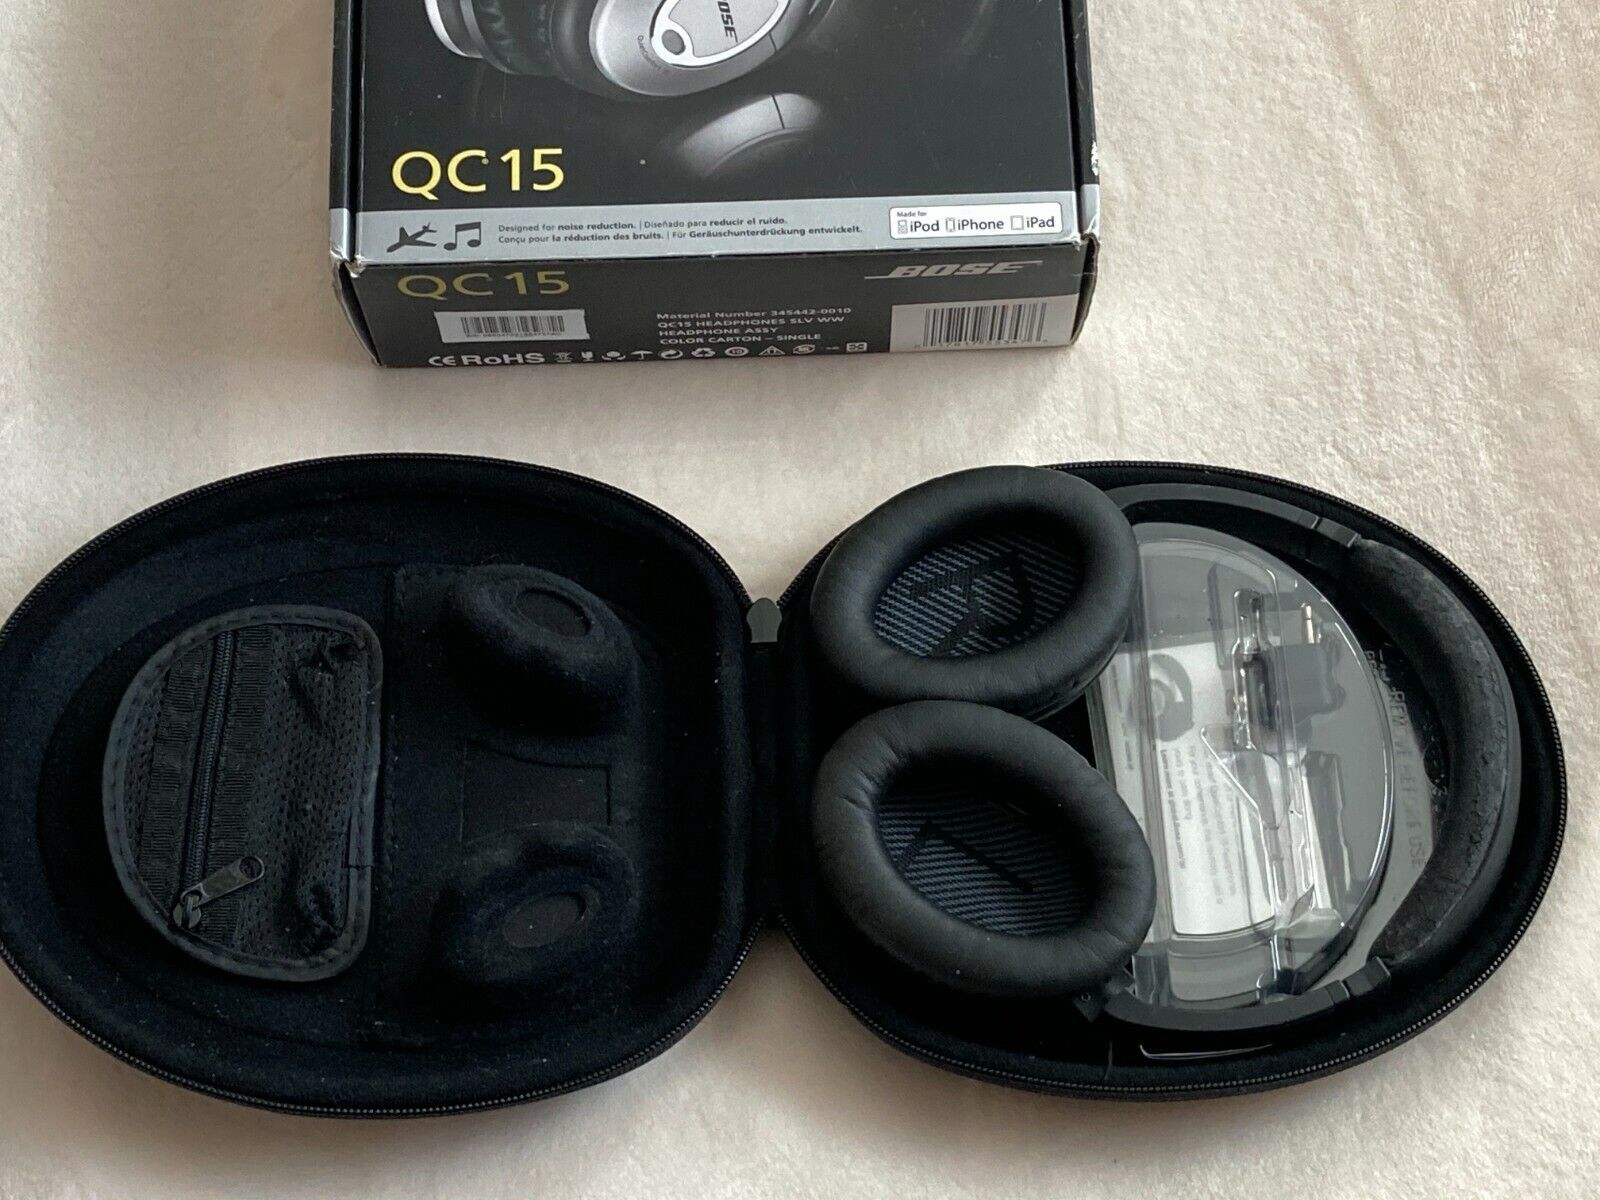 Bose QuietComfort 15 Headband Headphones - Silver/Black - Pre-owned Original Box - $47.45